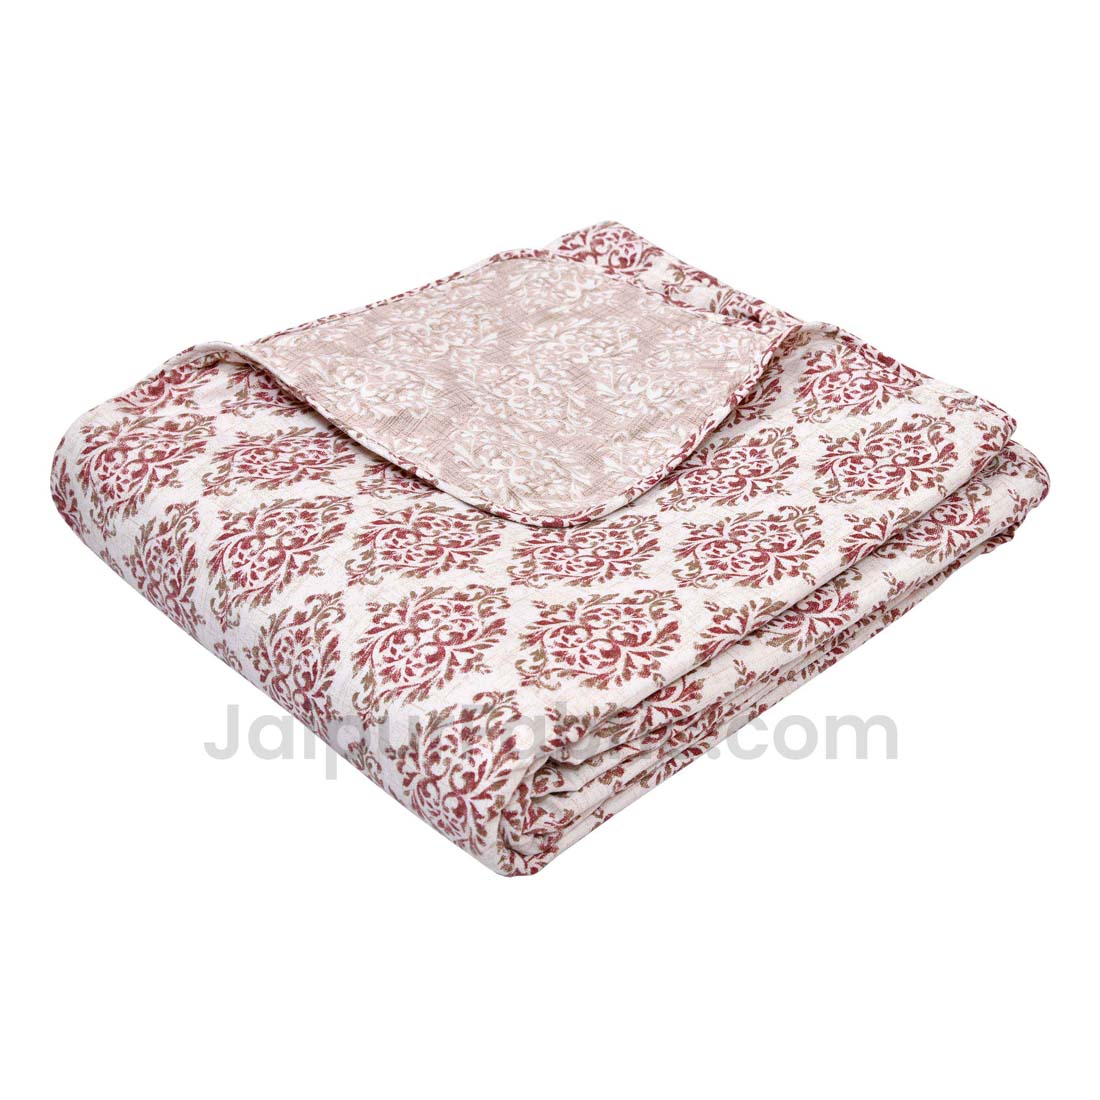 JaipurFabric® Pink Ethnic Double Bed Reversible Dohar